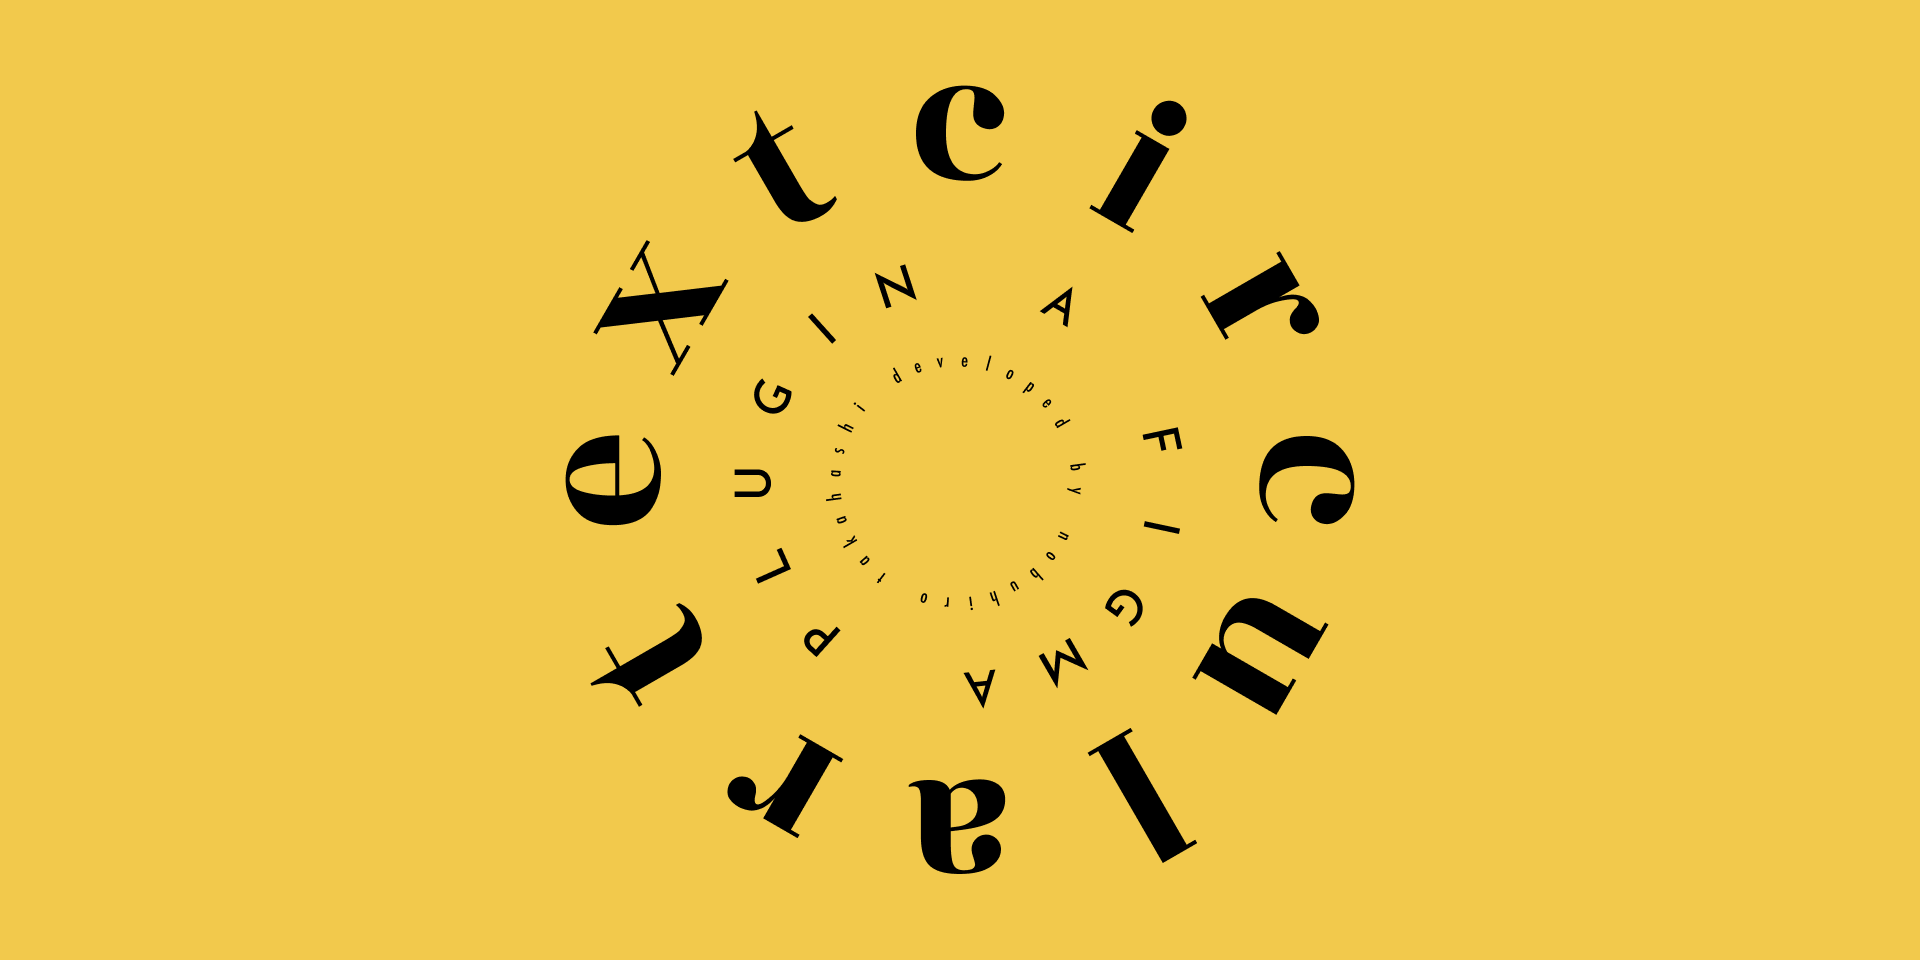 Figma Plugin「Circular Text Plugin」を作りました